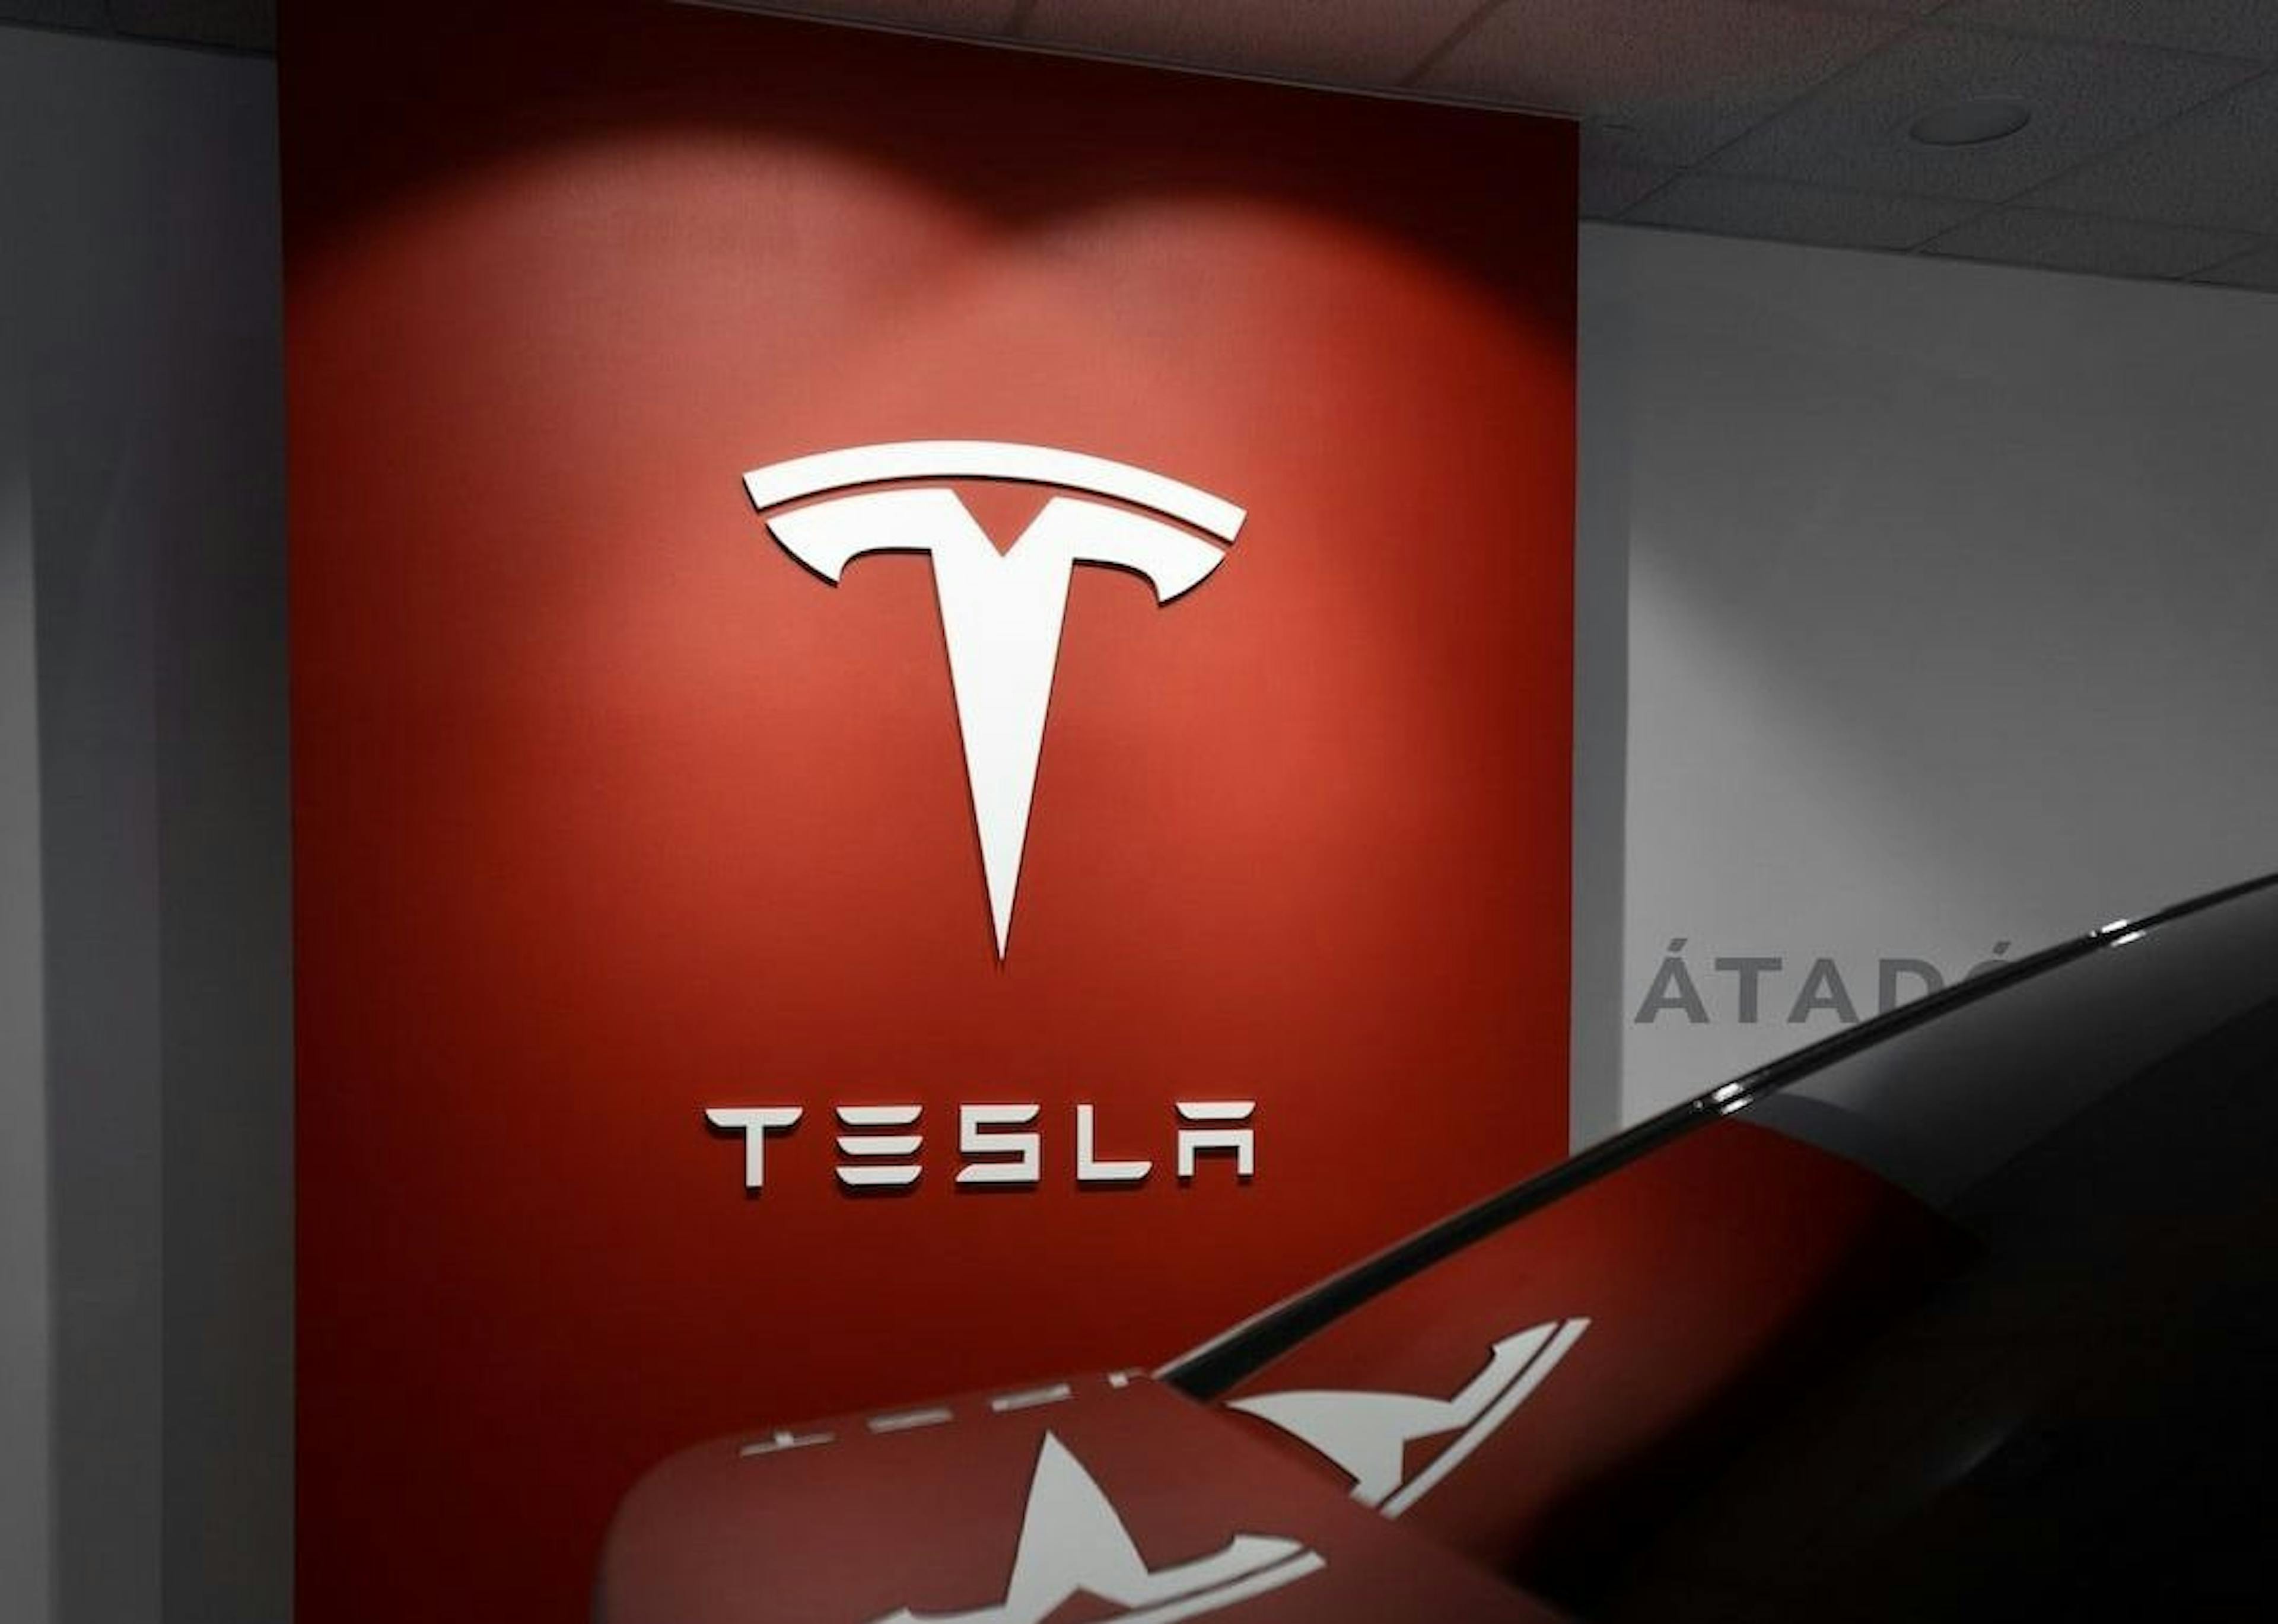 featured image - Tesla va construire une Gigafactory de 5 milliards de dollars au Mexique